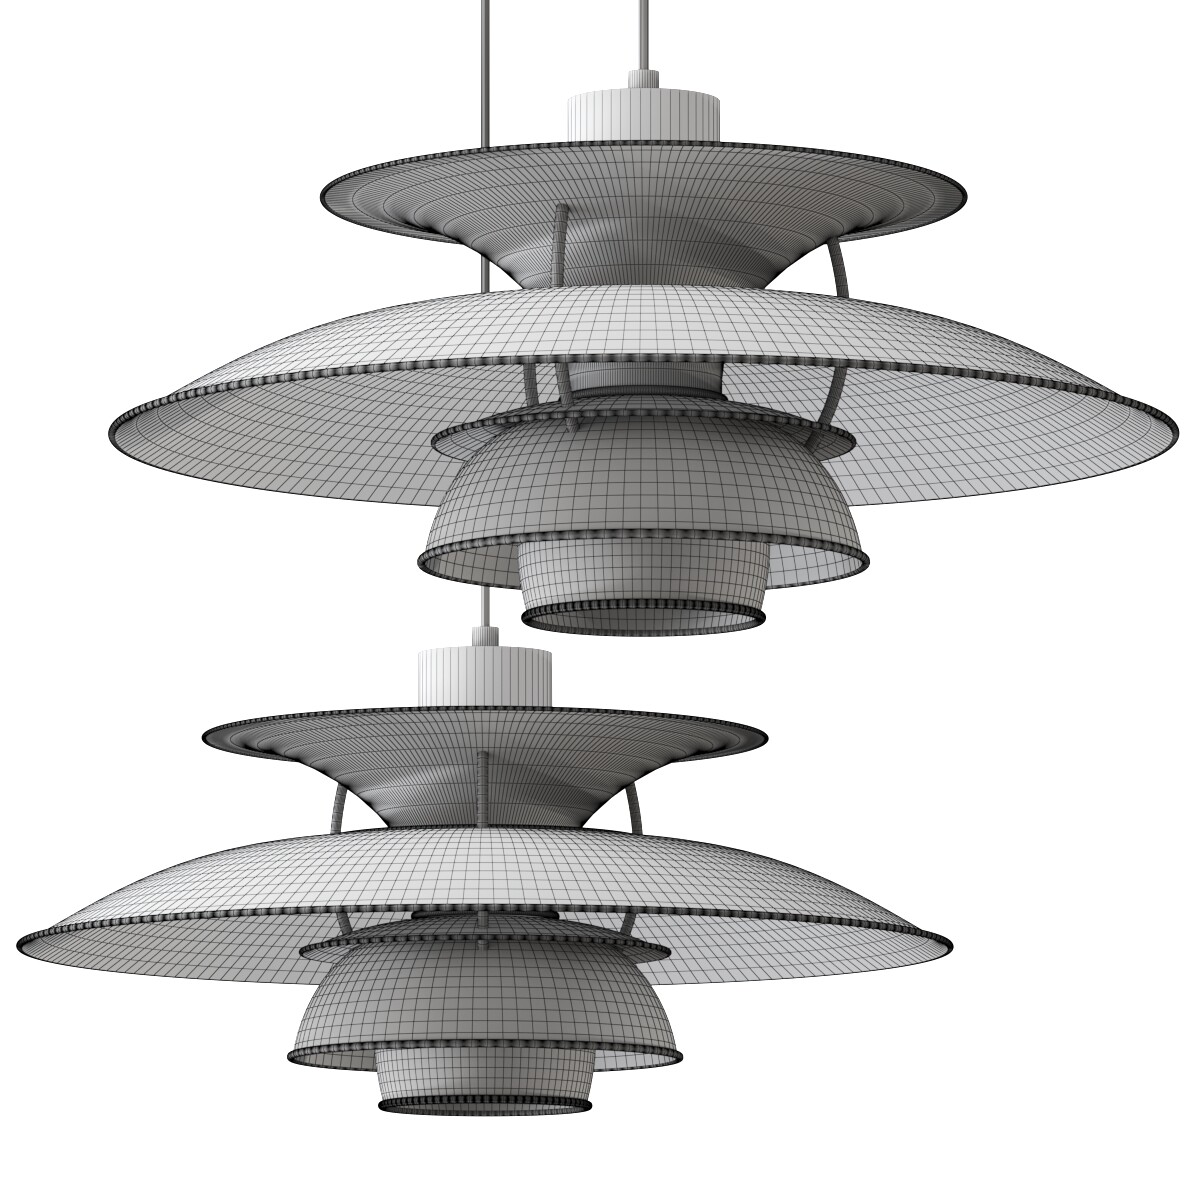 PH5 lamp - Louis Poulsen 3D model